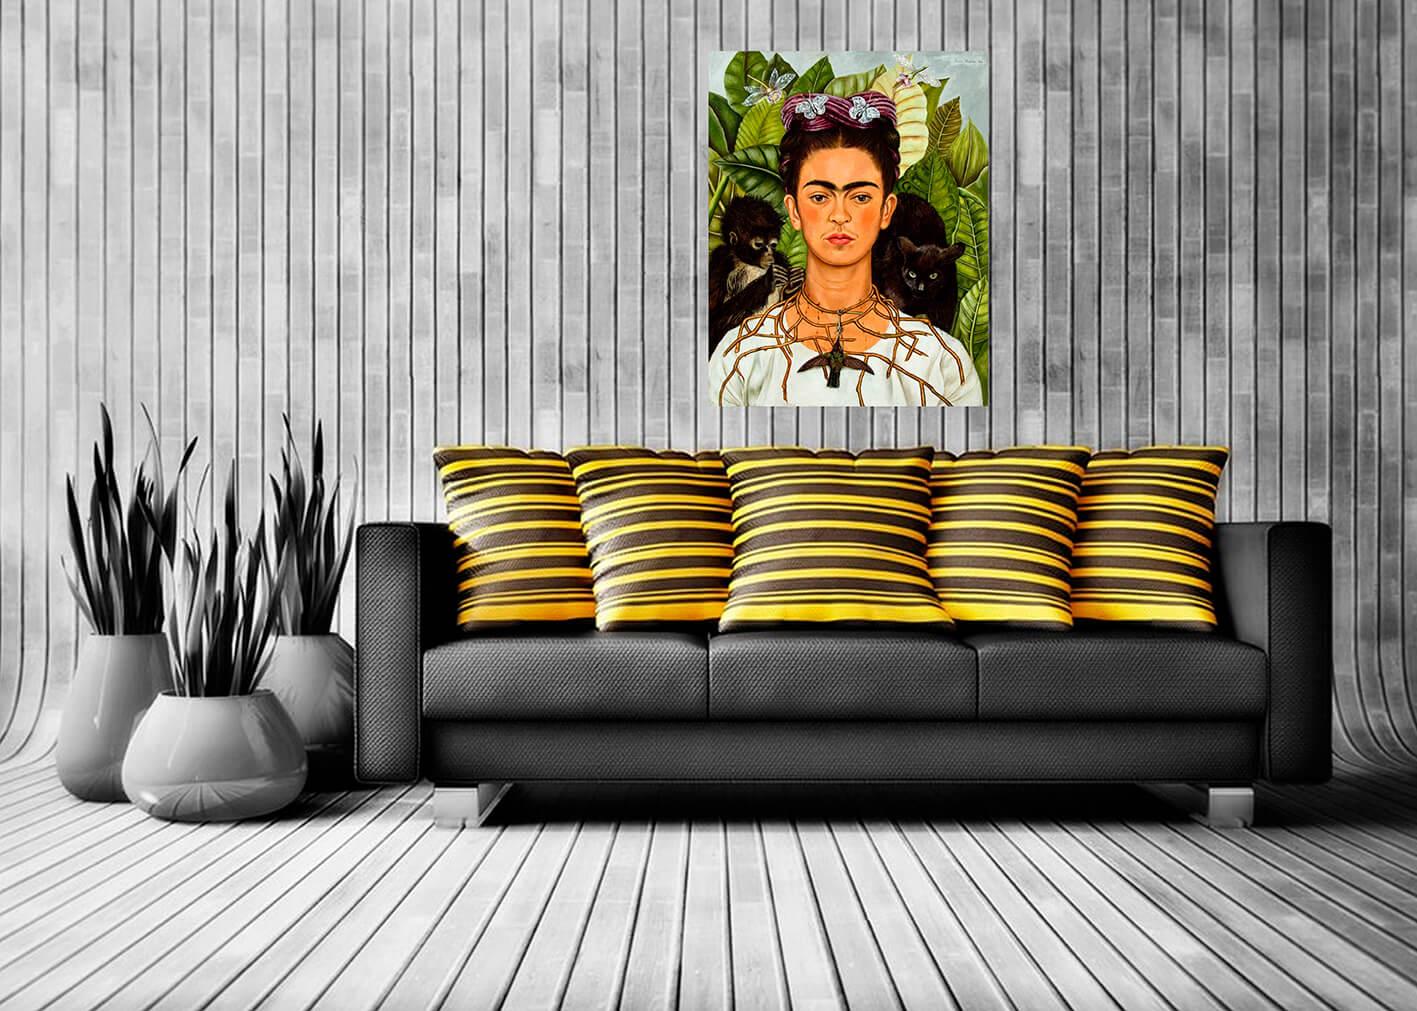 Pilt Frida Kahlo - Ameɖokui ƒe Nɔnɔmetata kple Ŋù ƒe Kɔsɔkɔsɔ kple Hummingbird 3